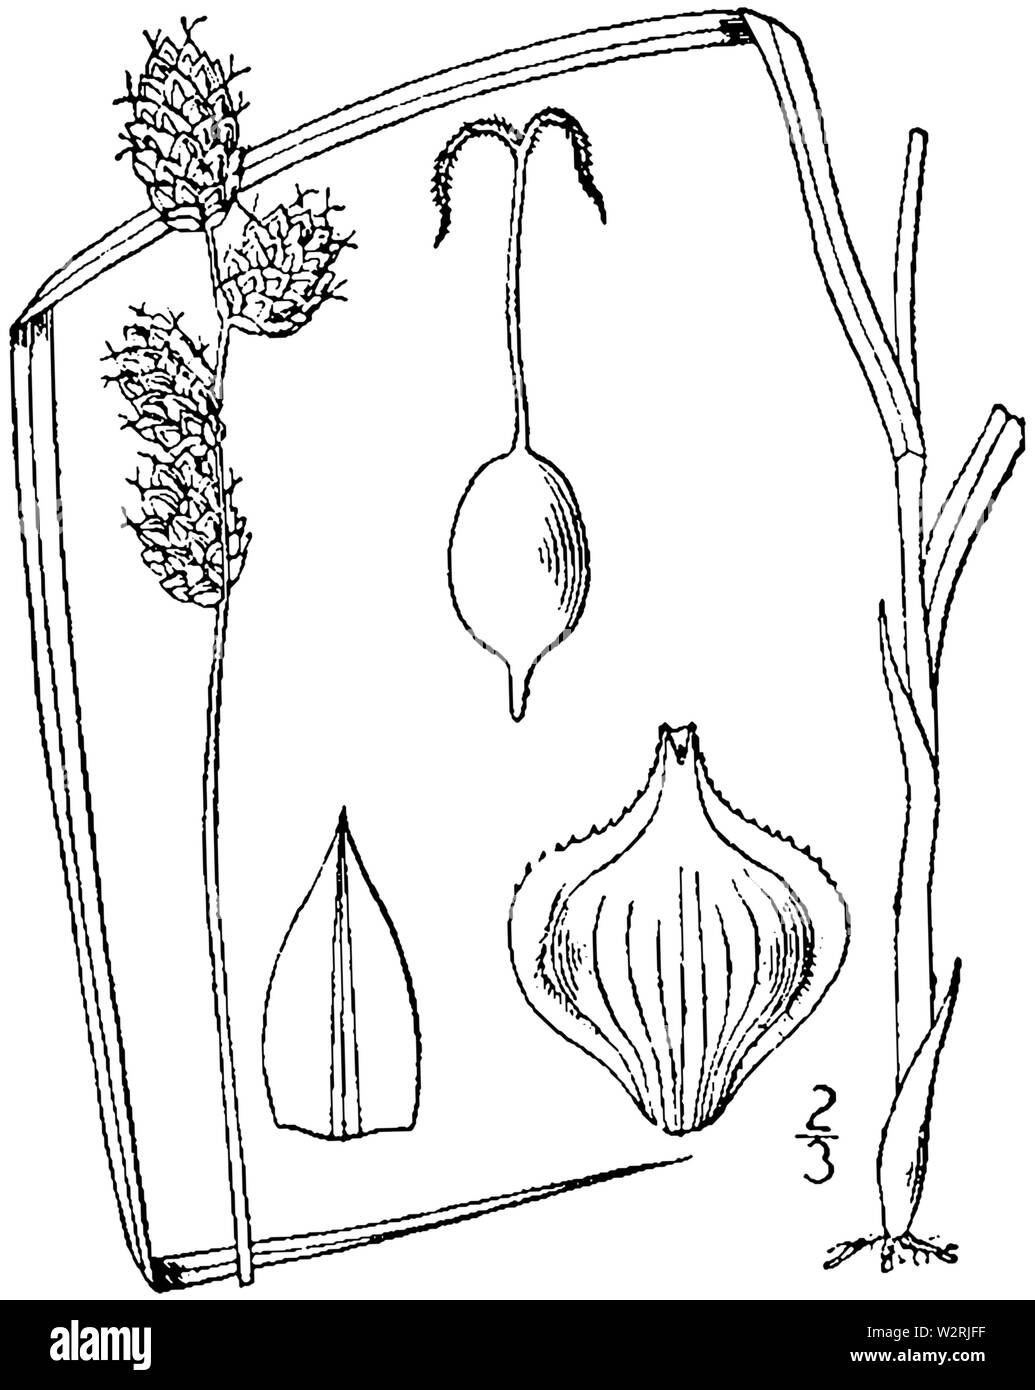 Carex alata drawing 1 Stock Photo